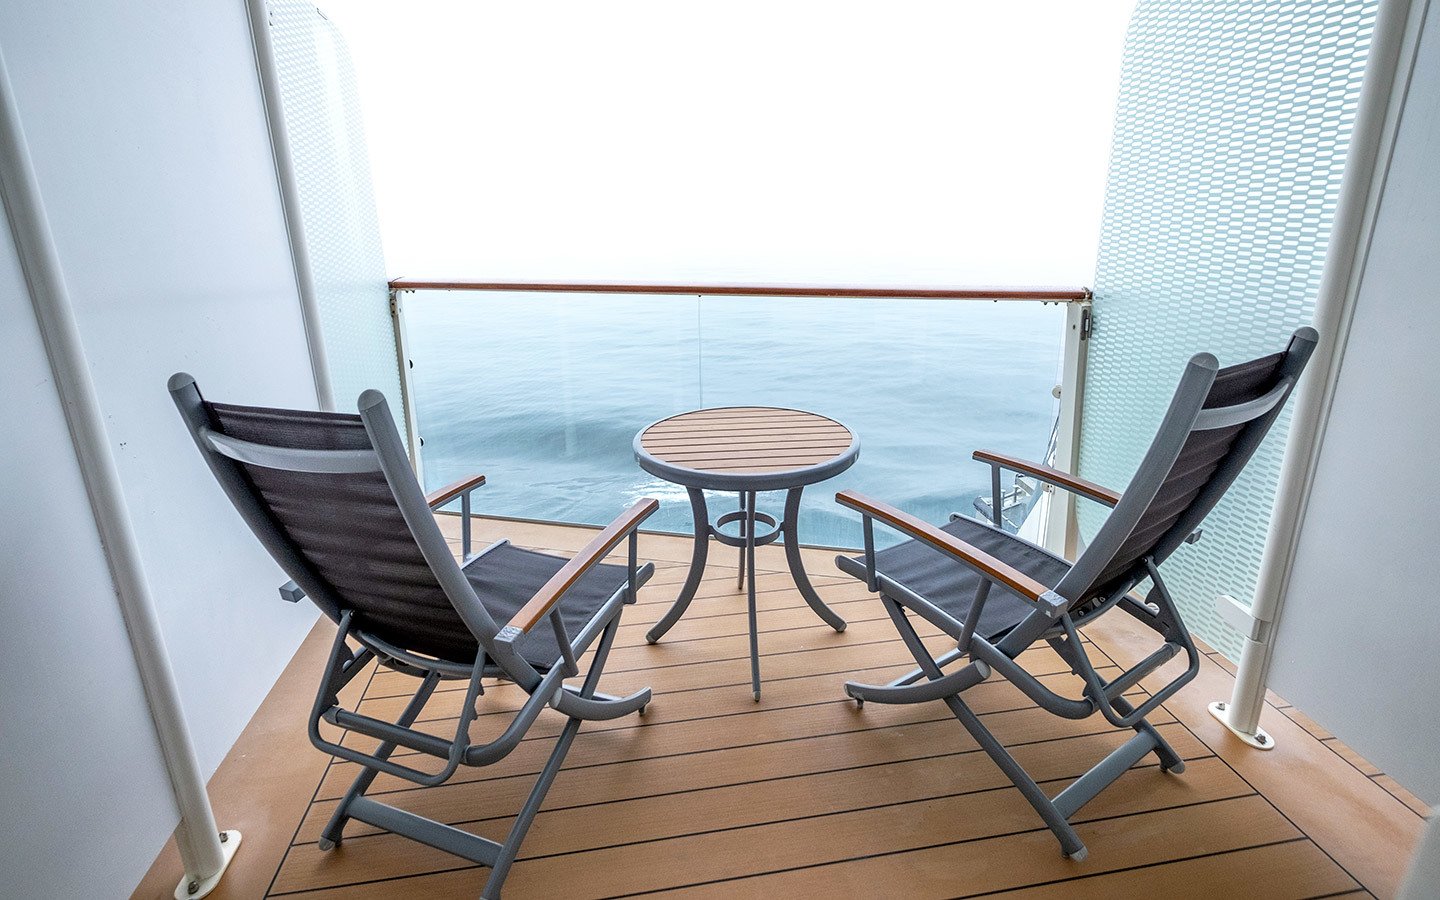 Misty morning on a cruise ship balcony